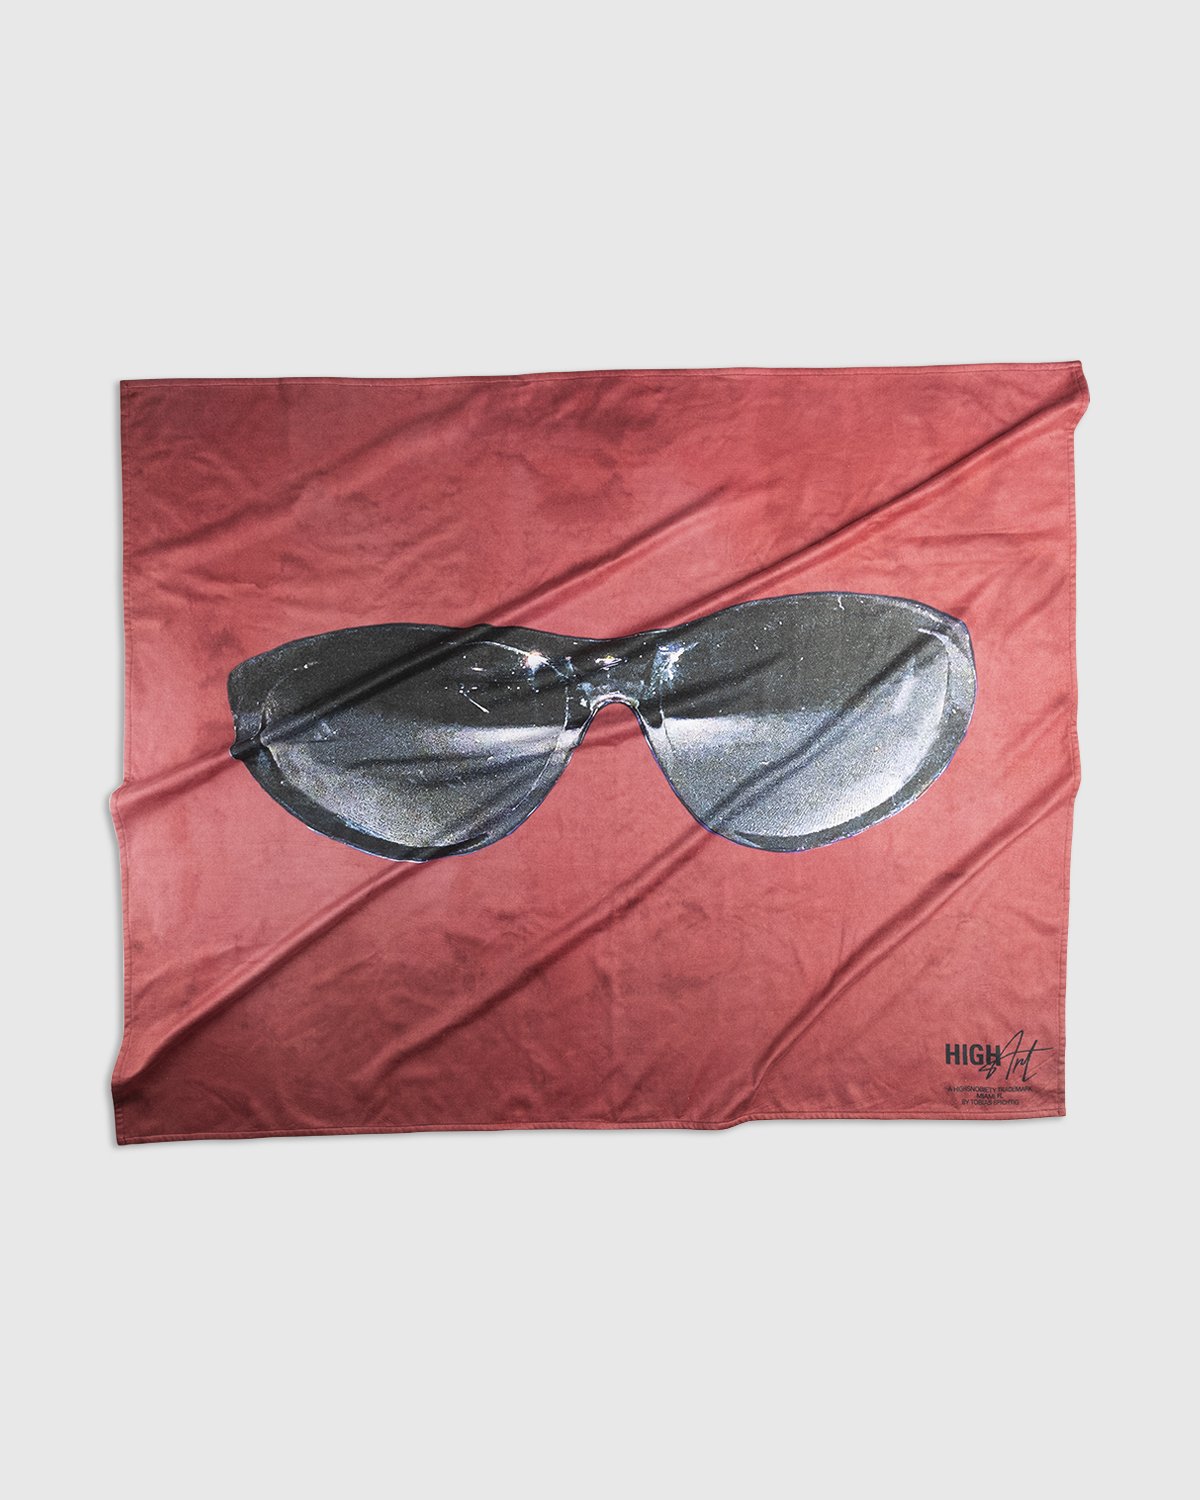 Tobias Spichtig x Highsnobiety - Sunglasses Beach Towel - Lifestyle - Black - Image 1